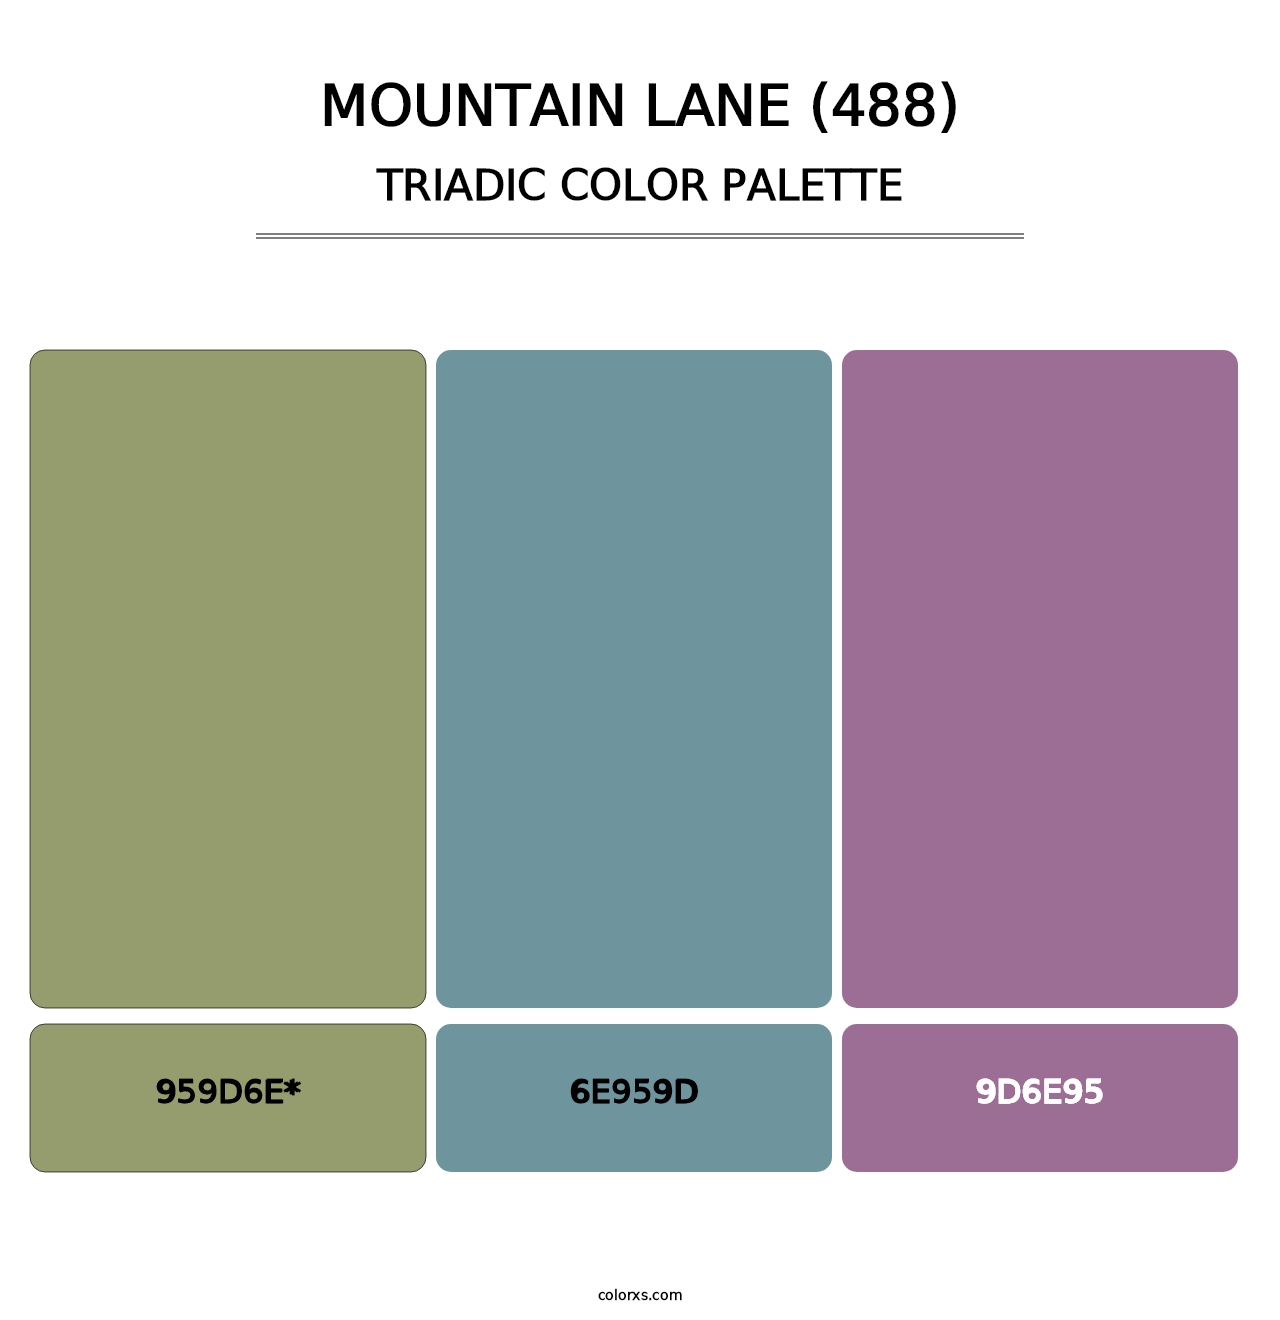 Mountain Lane (488) - Triadic Color Palette